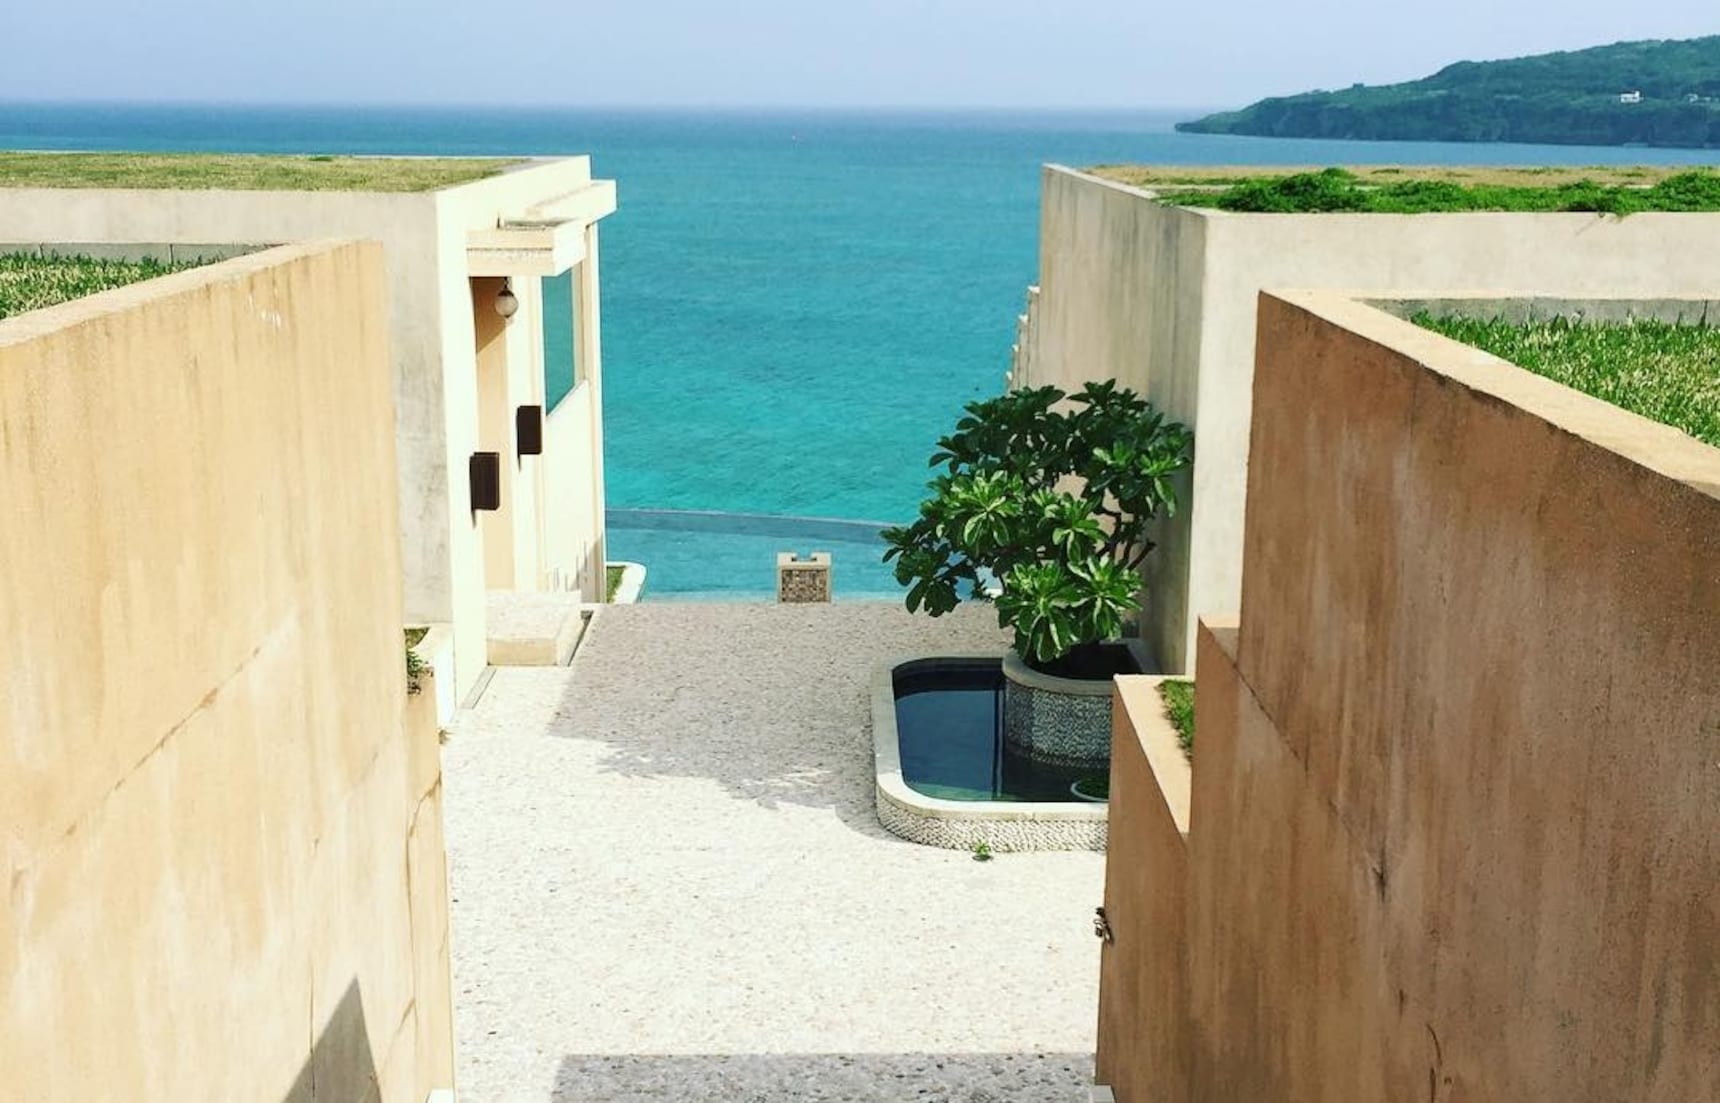 Secluded Luxury on Okinawa's Main Island